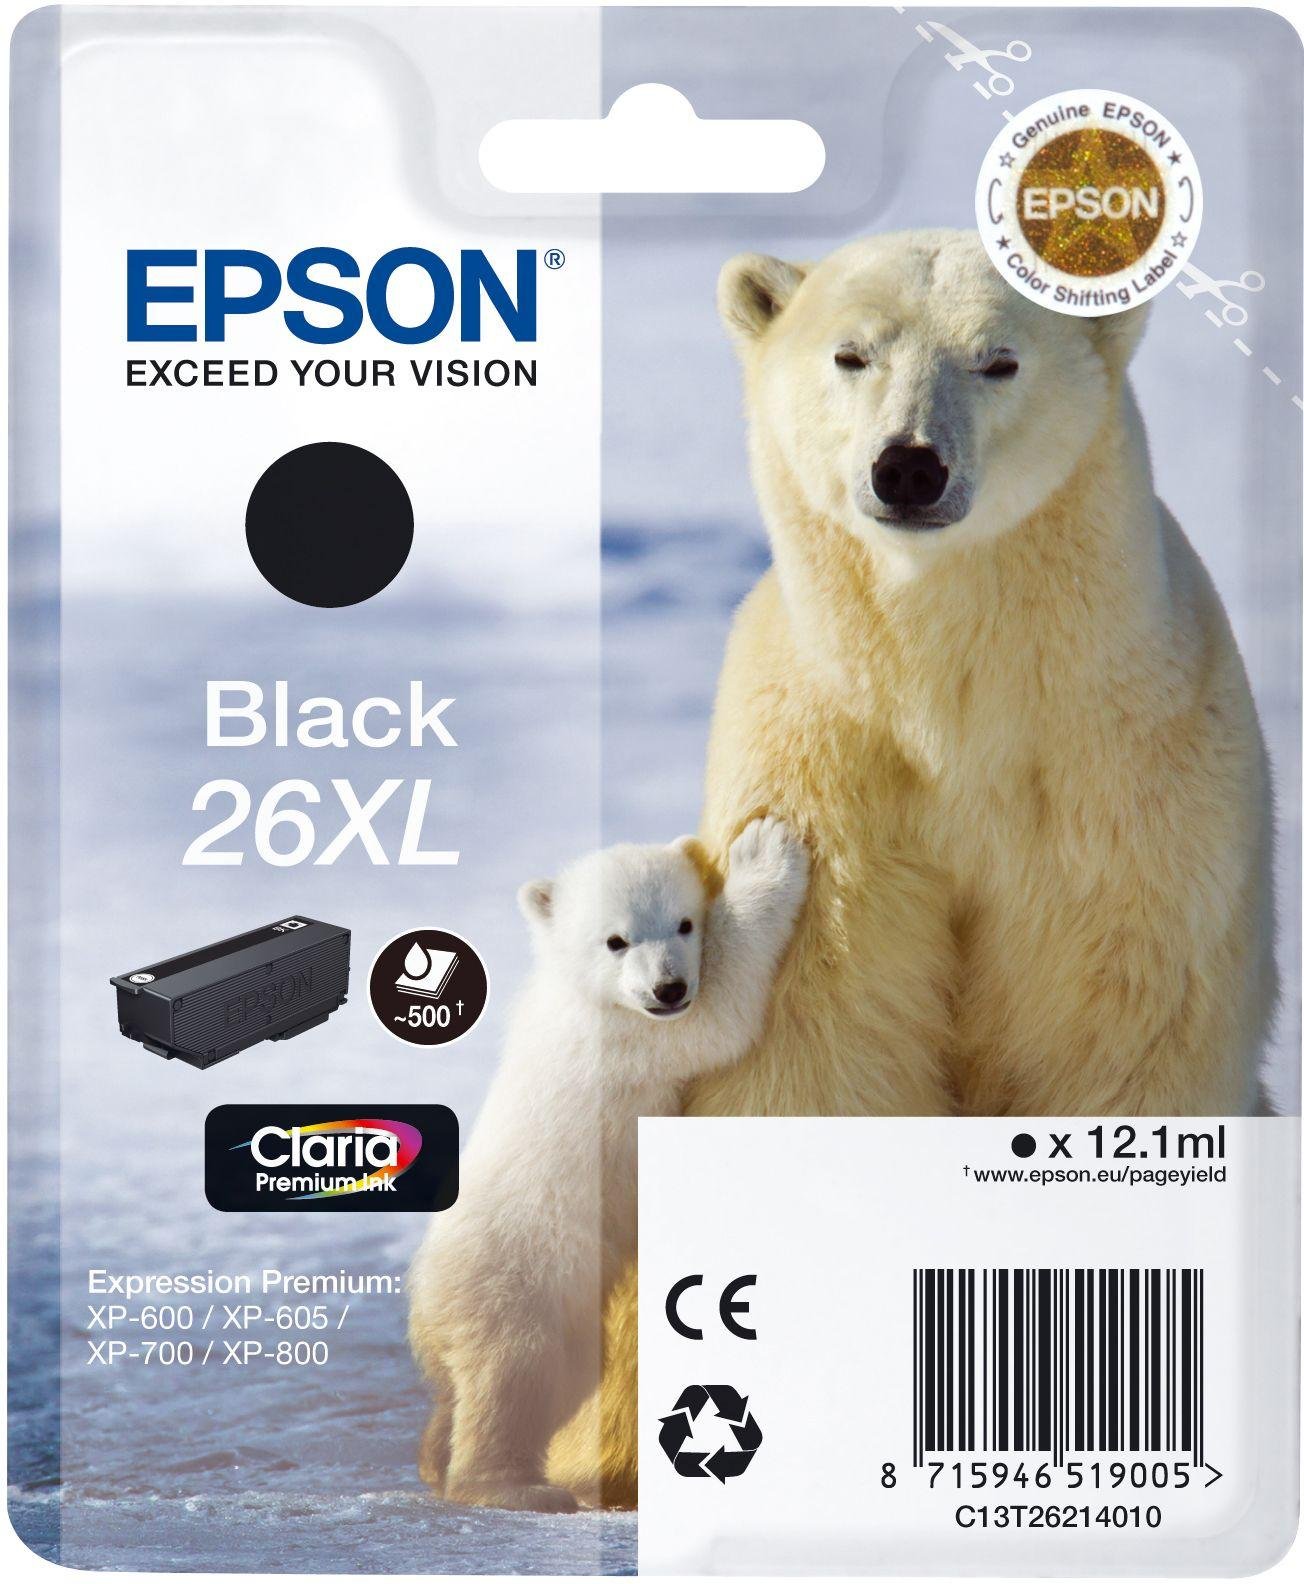 Epson Polar Bear 26XL Black Ink Cartridge review